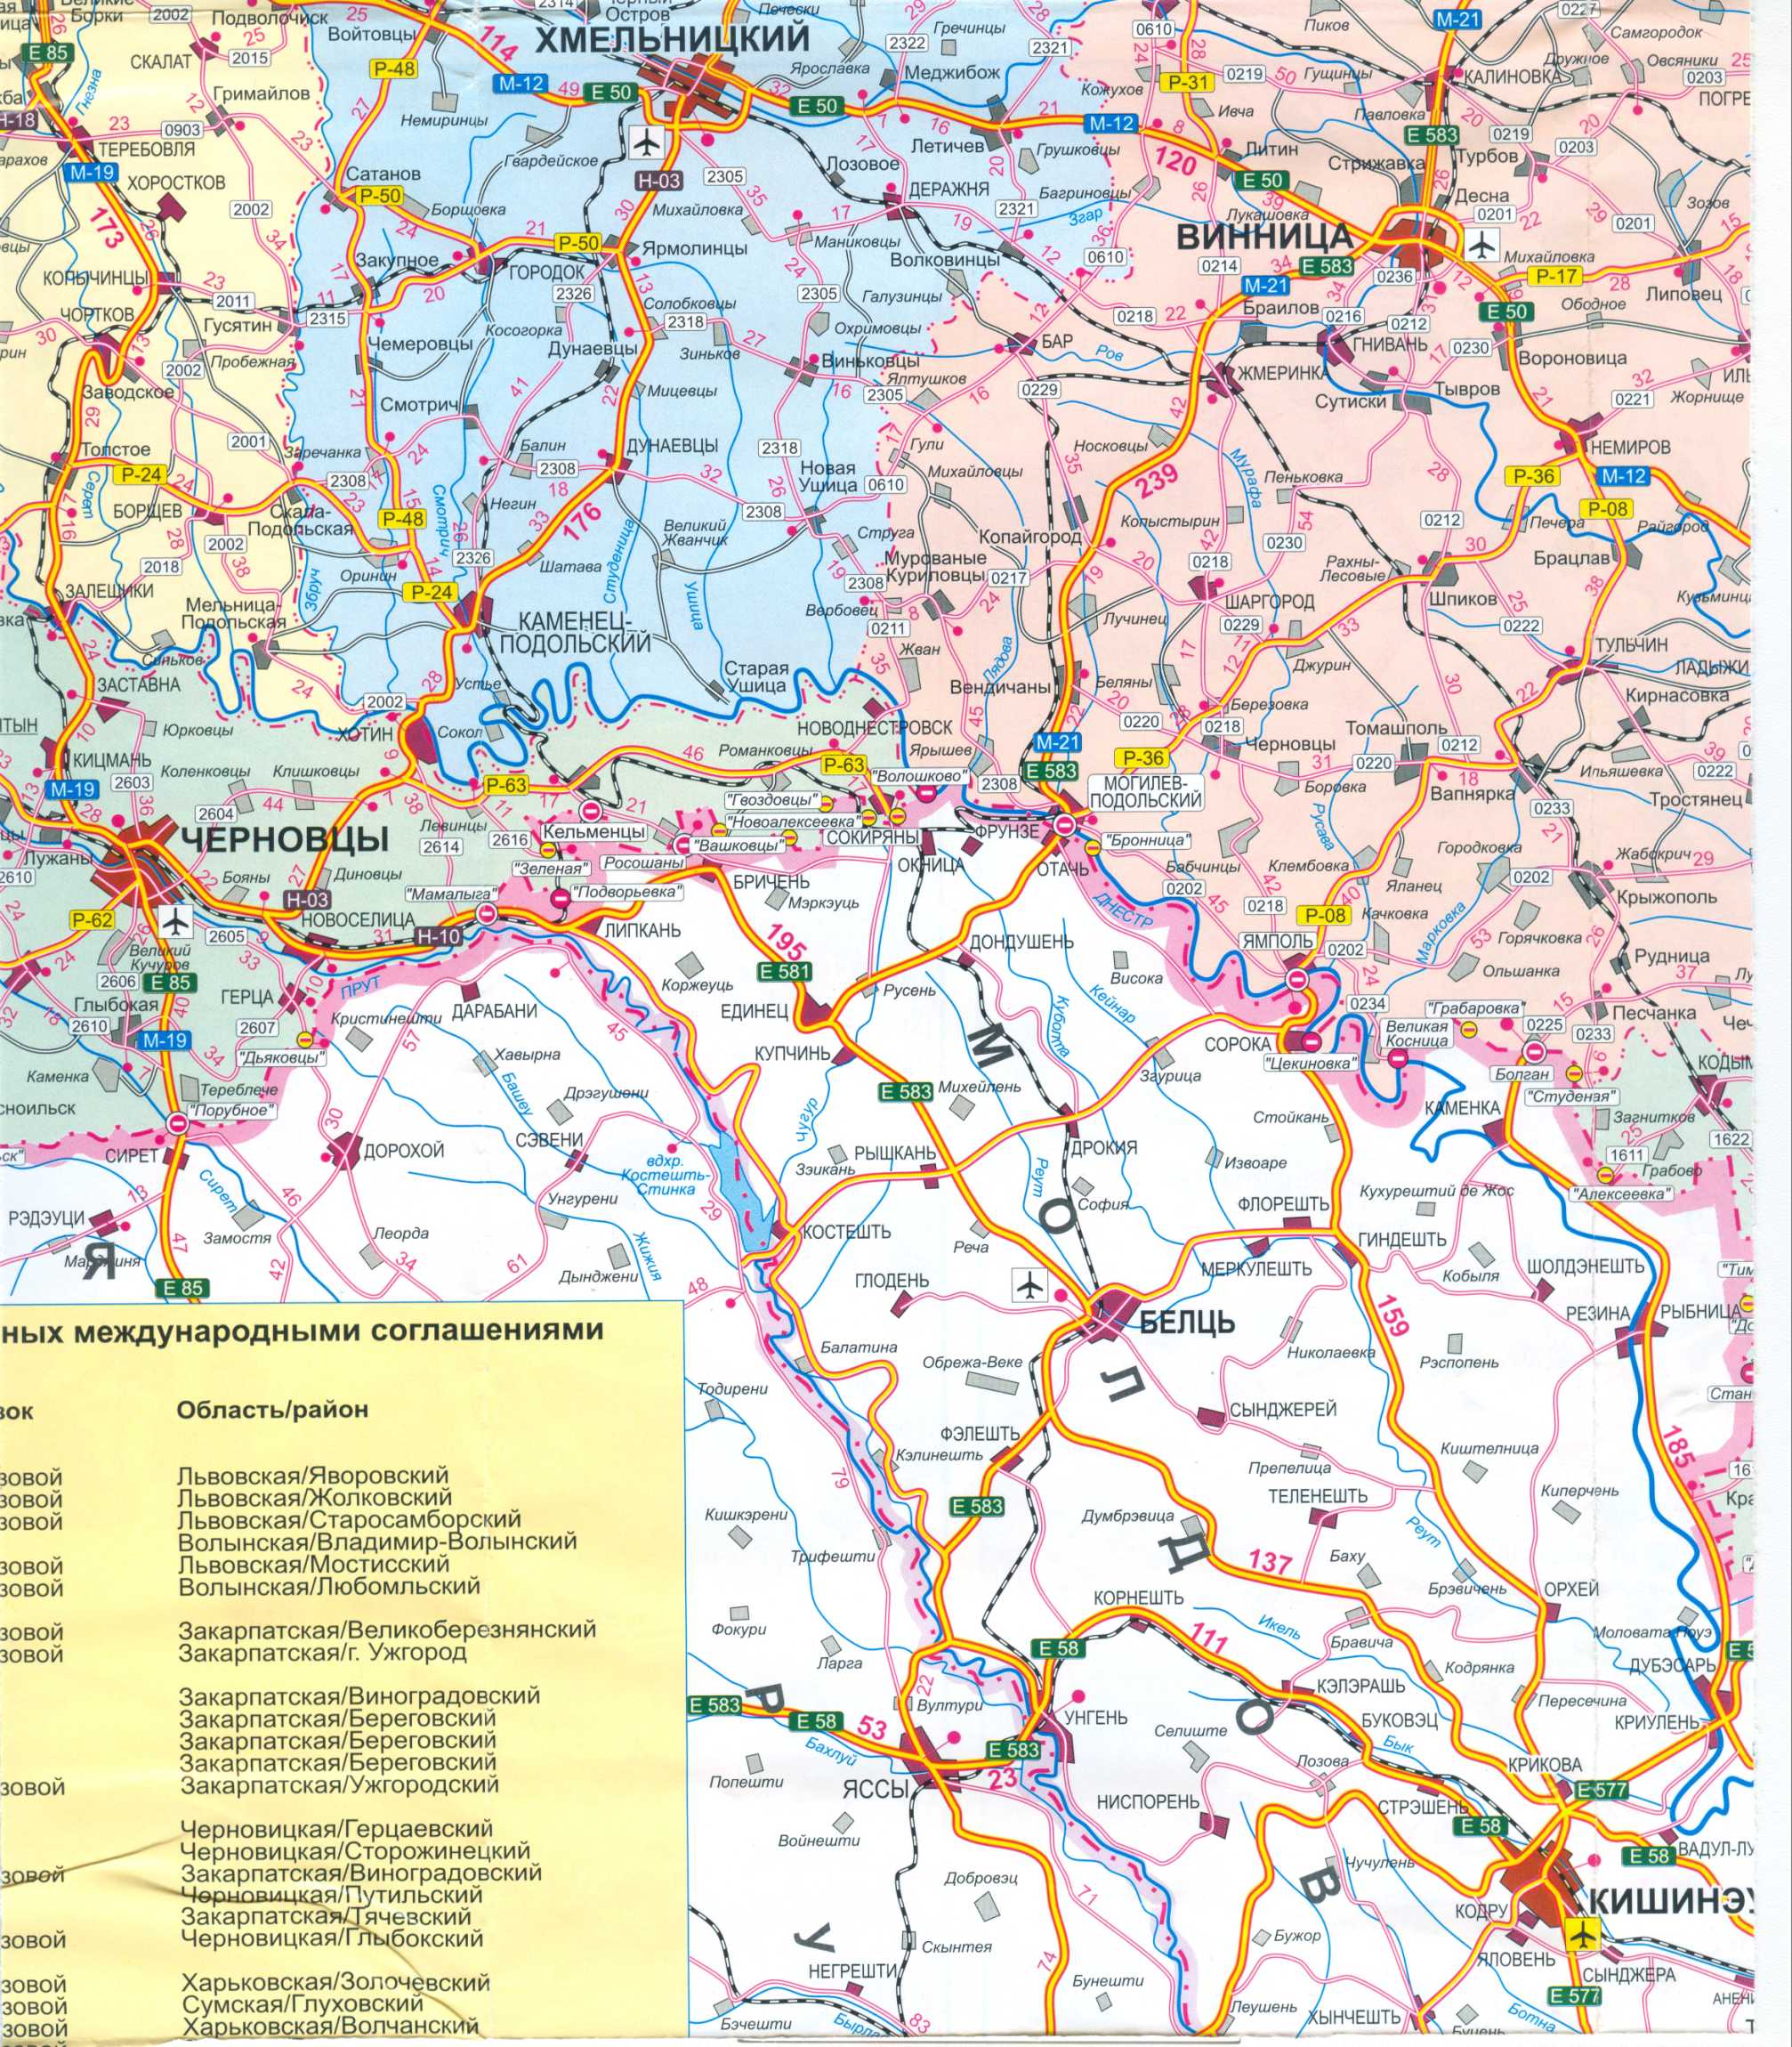 Map of Ukraine free. Road Map of Ukraine download free. Big Map of Ukraine roads free, B1